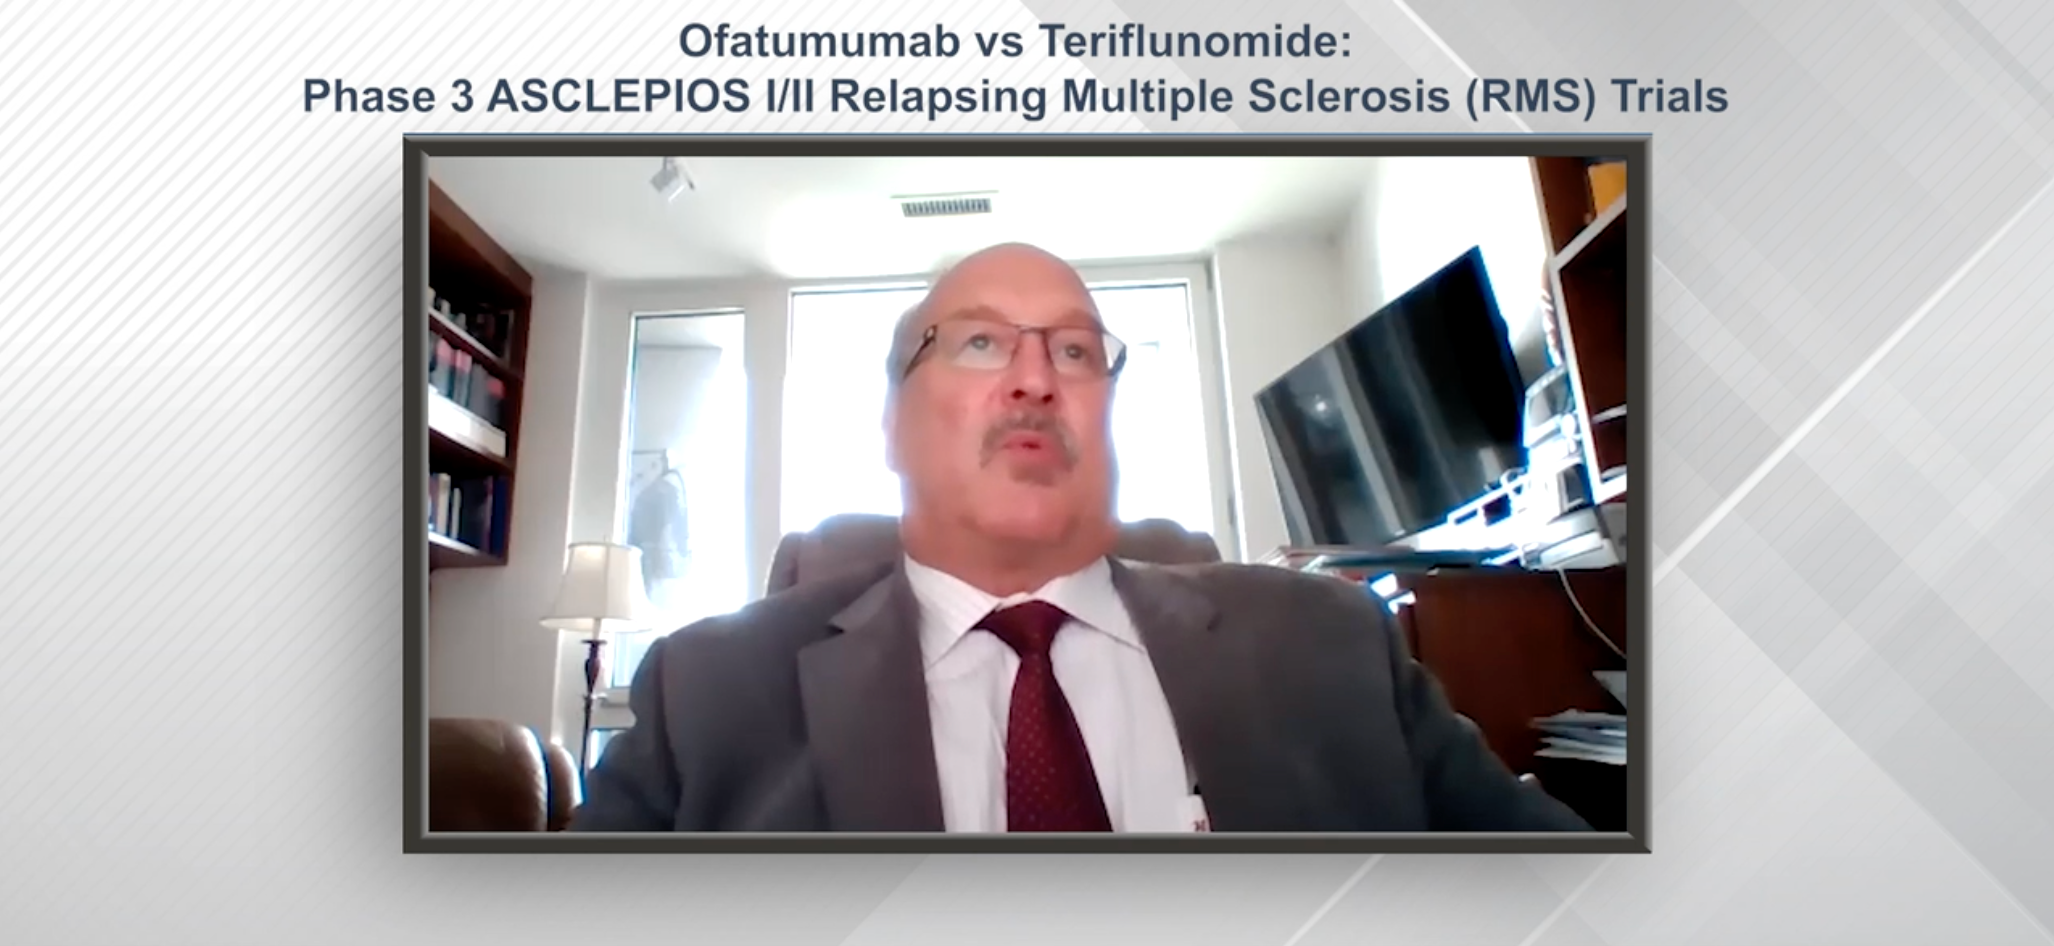 Ofatumumab vs Teriflunomide: ASCLEPIOS I/II RMS Trials